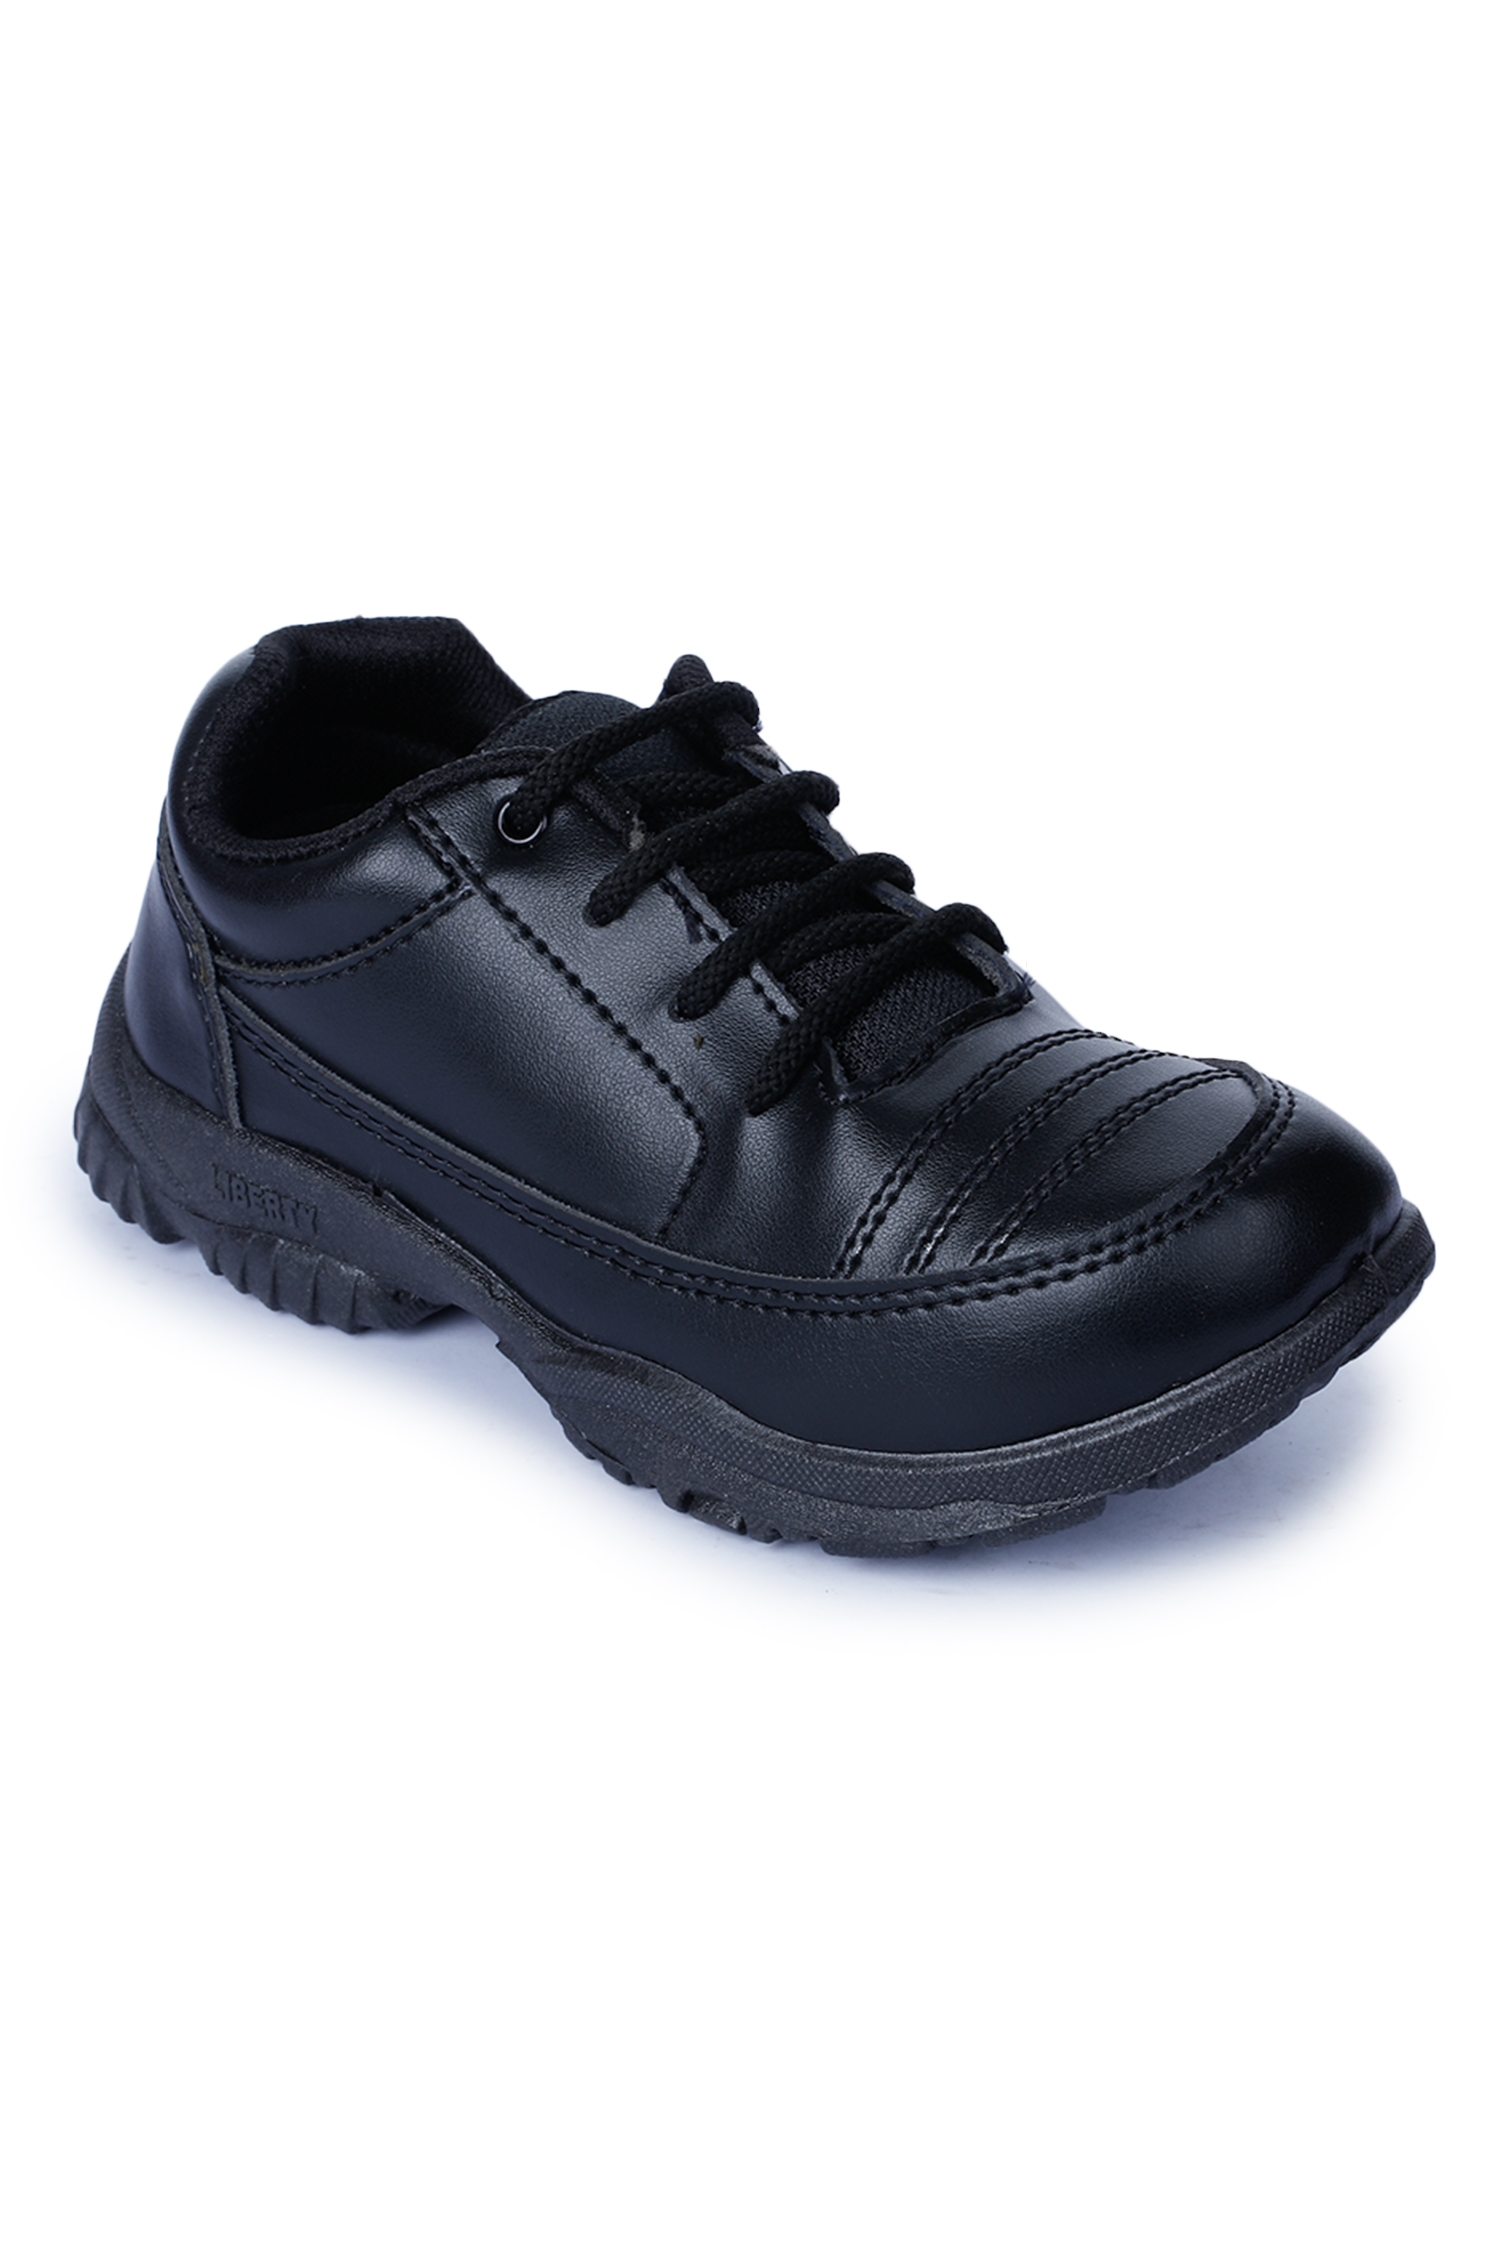 Liberty | Liberty Prefect Black School Shoes DURACOMF-5_Black For - Boys